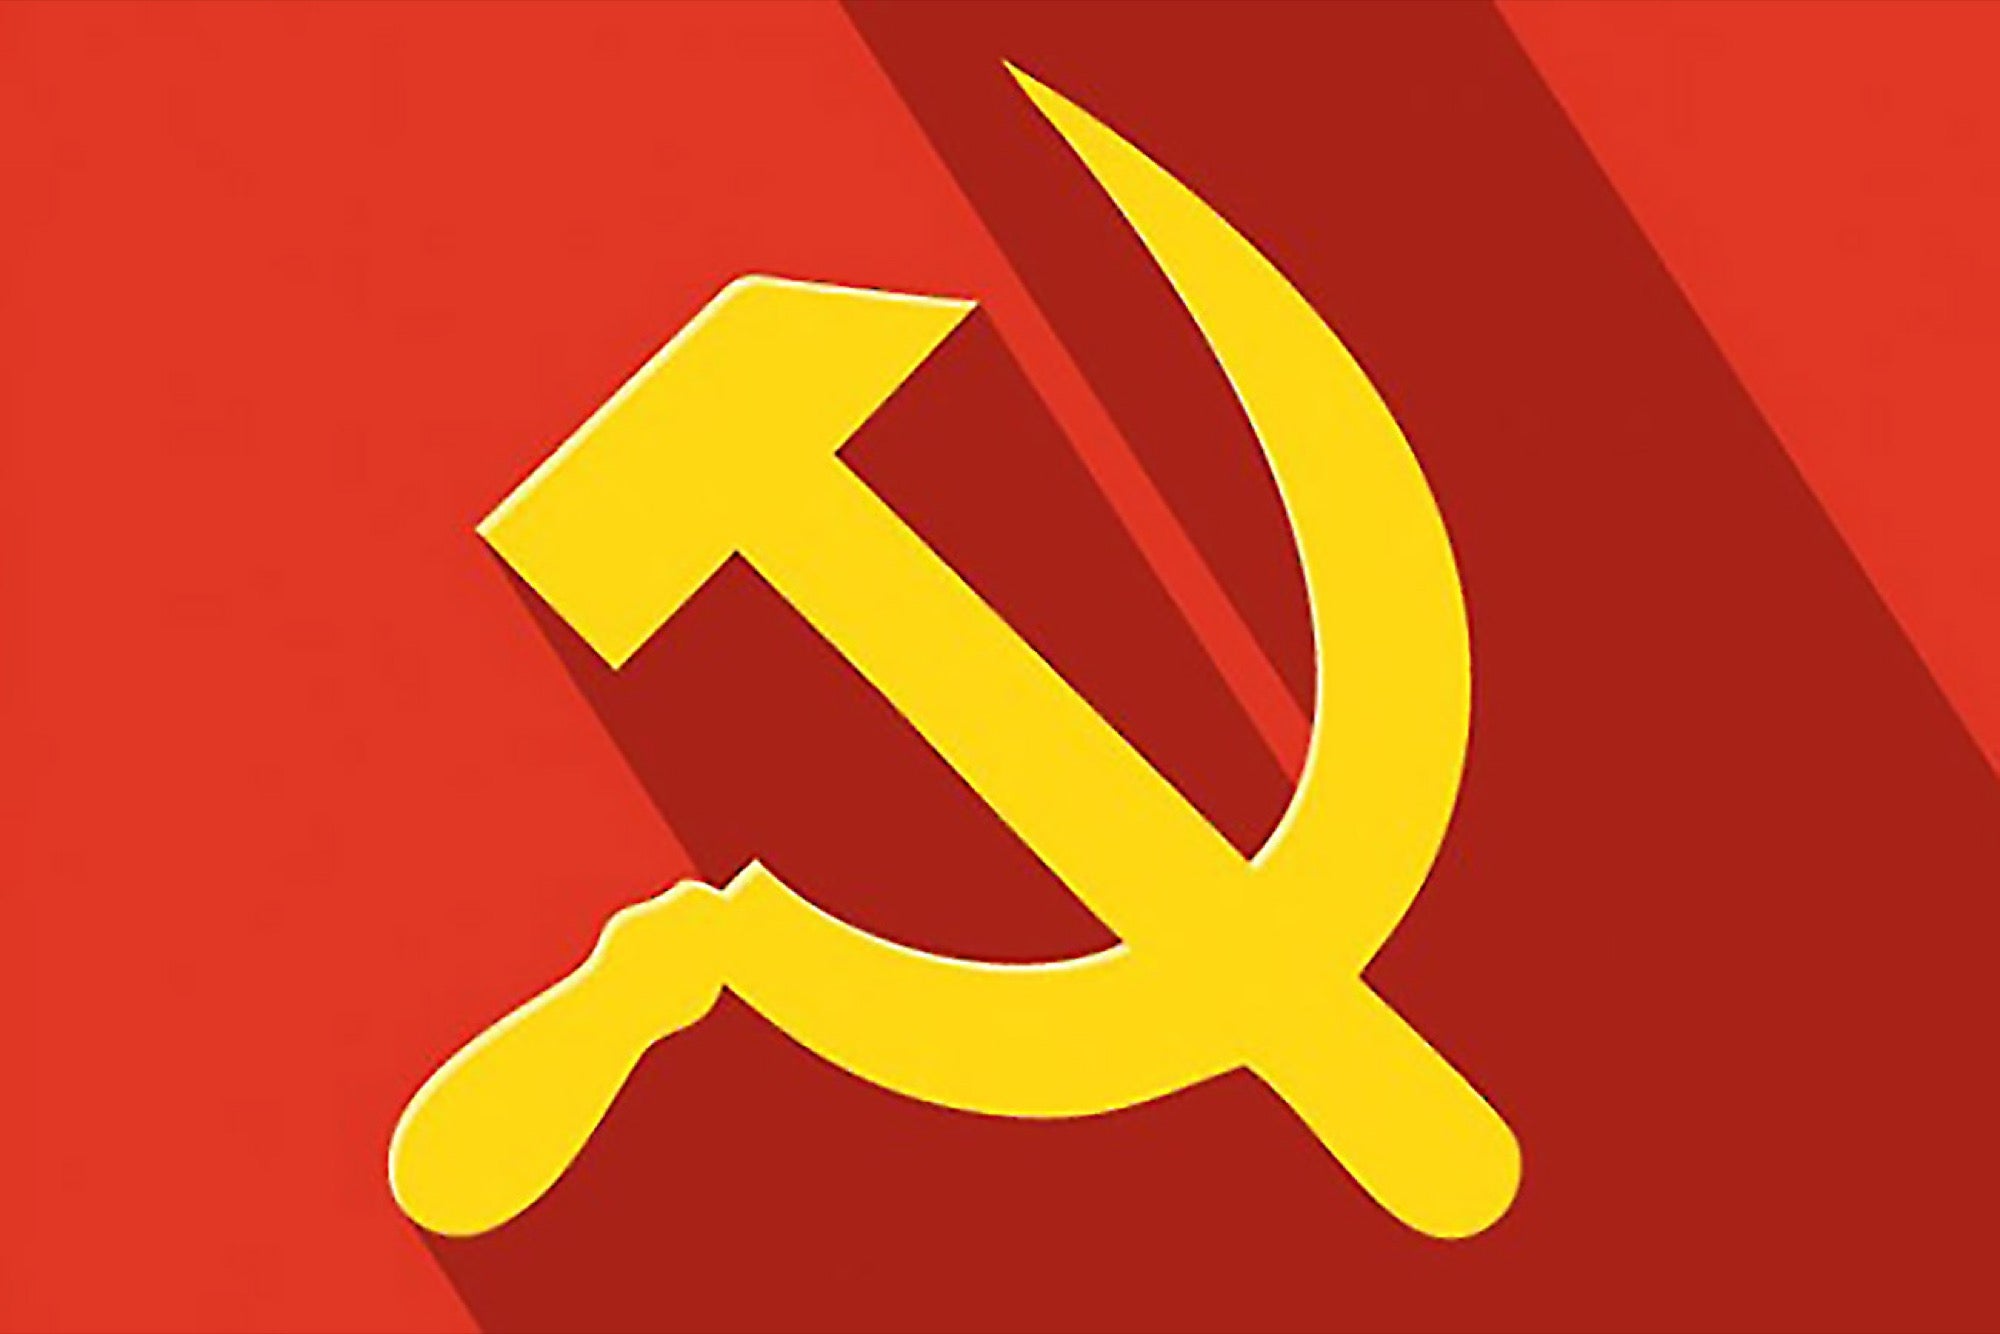 communism-blank-template-imgflip